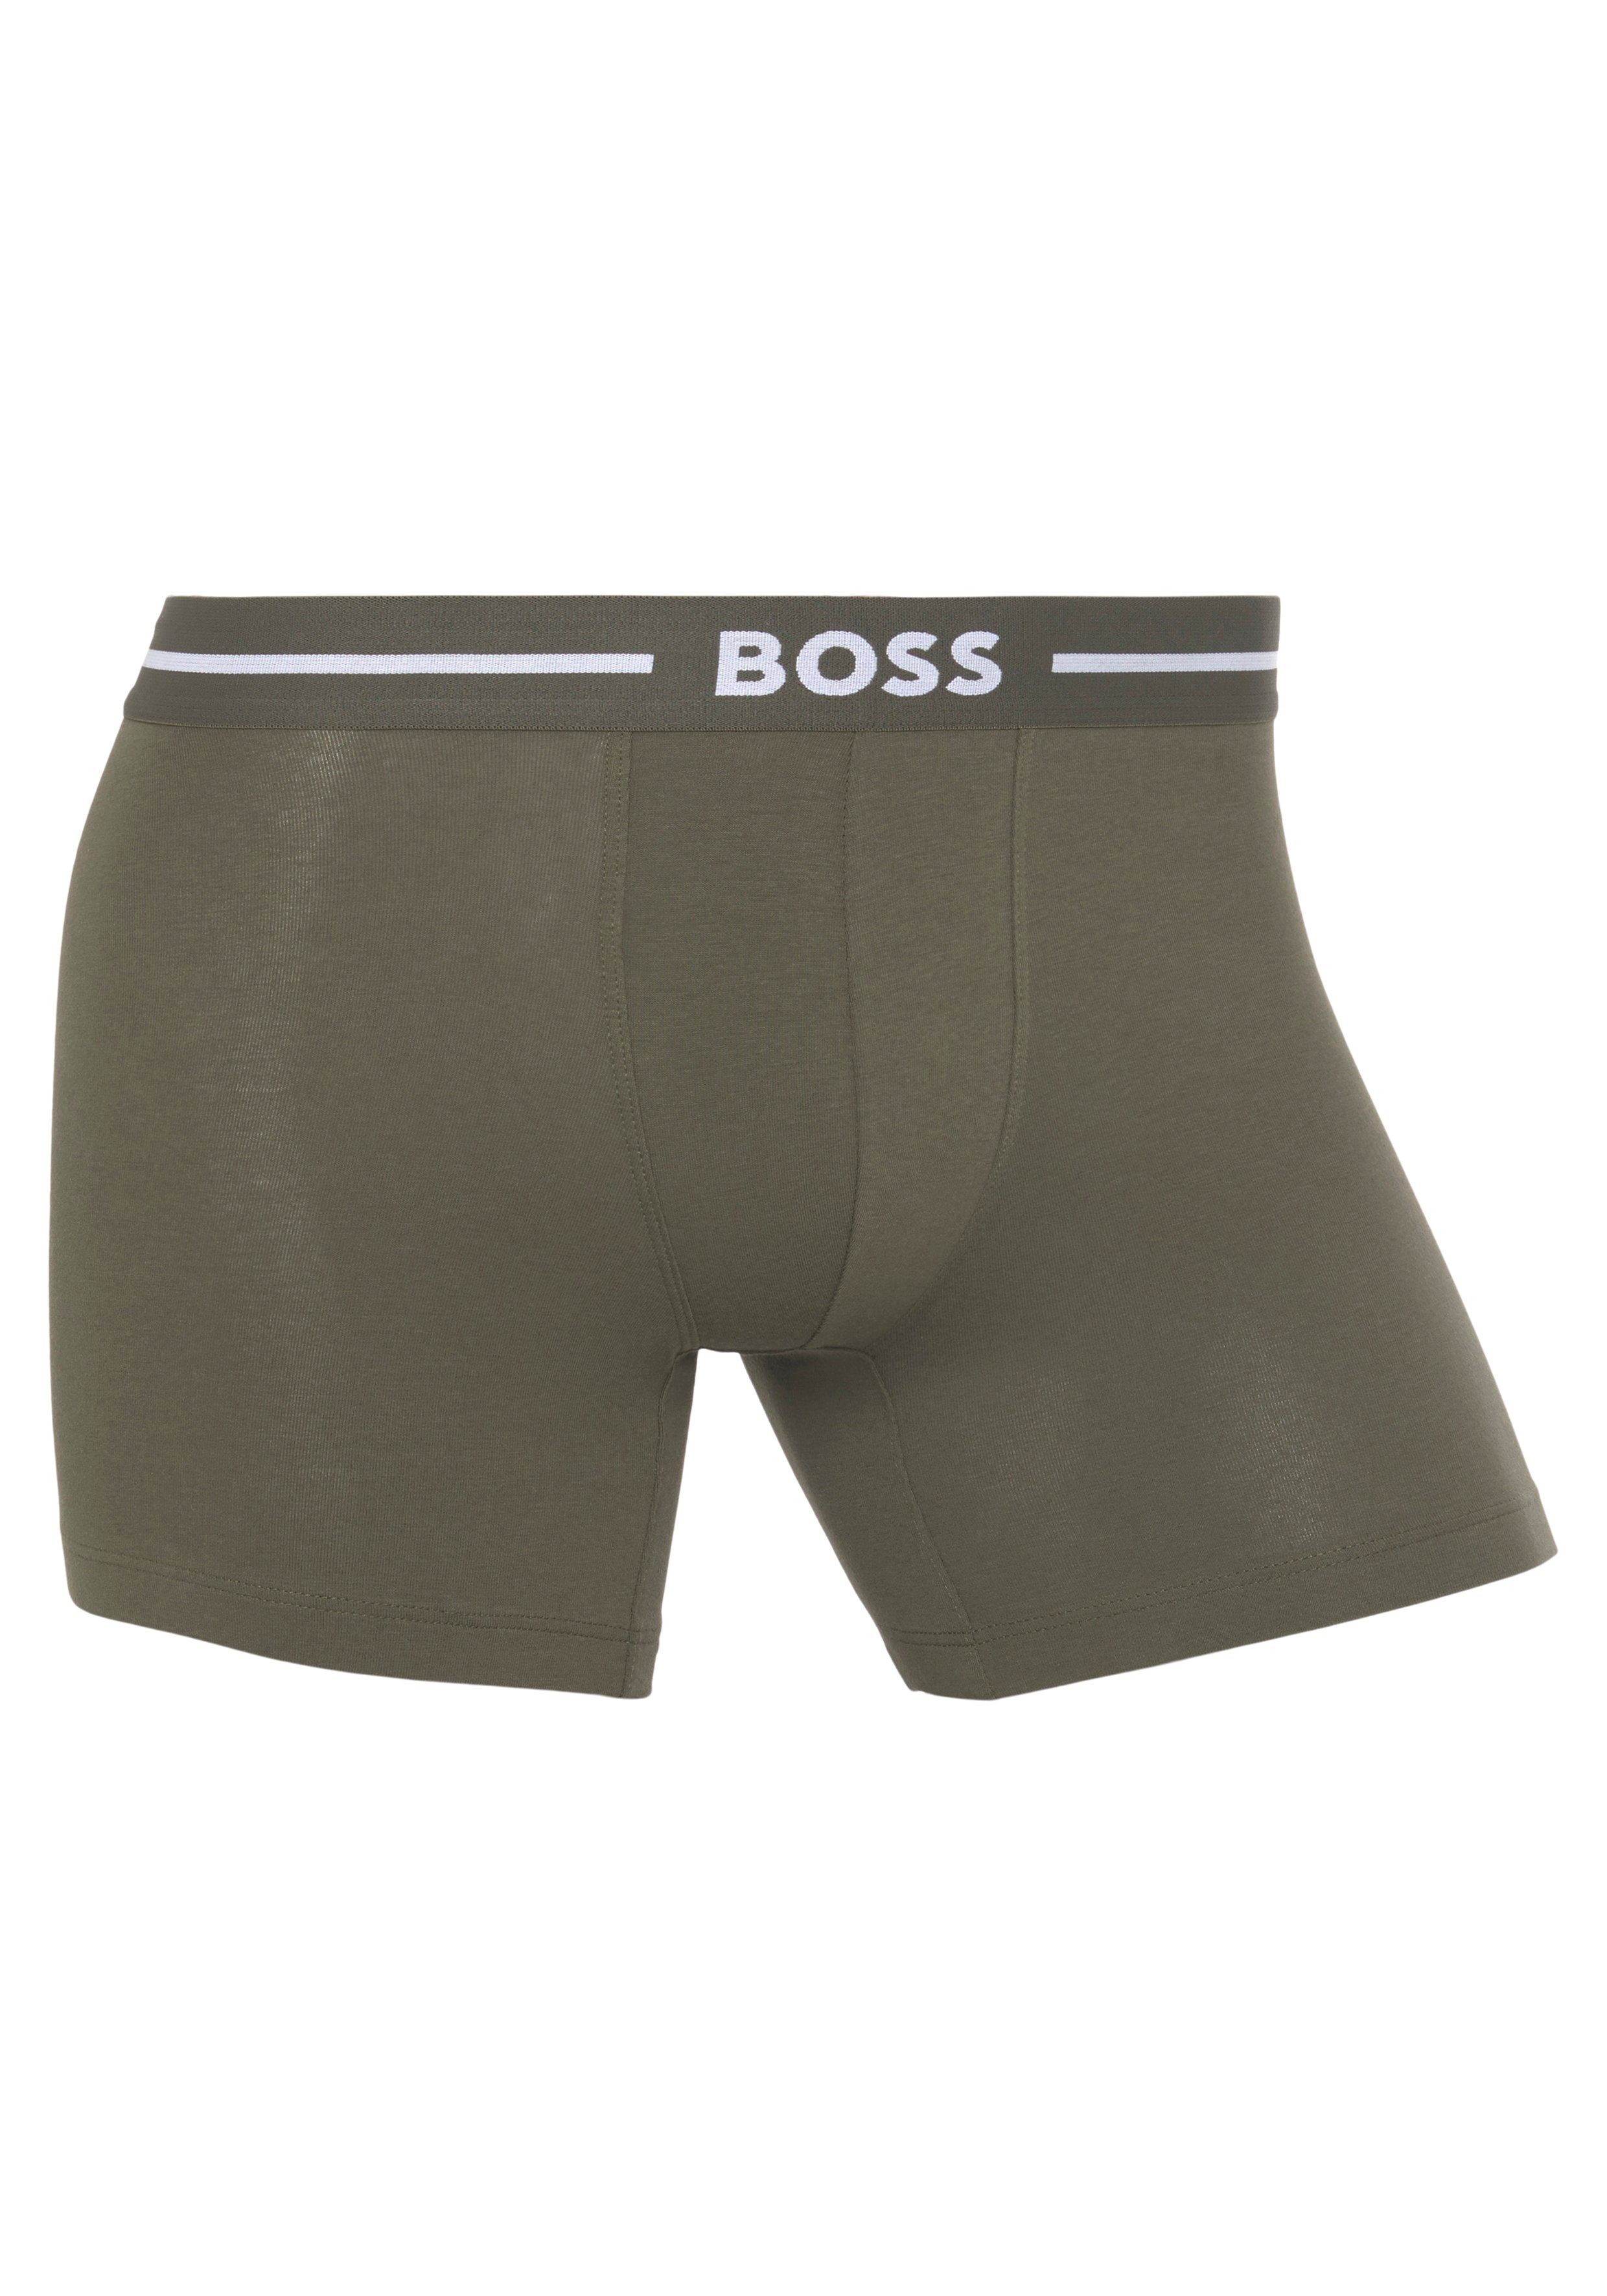 BOSS Boxershorts Br 3P Bold Schwarz/Khaki am Logoschriftzug (Packung, 3er) Bund mit